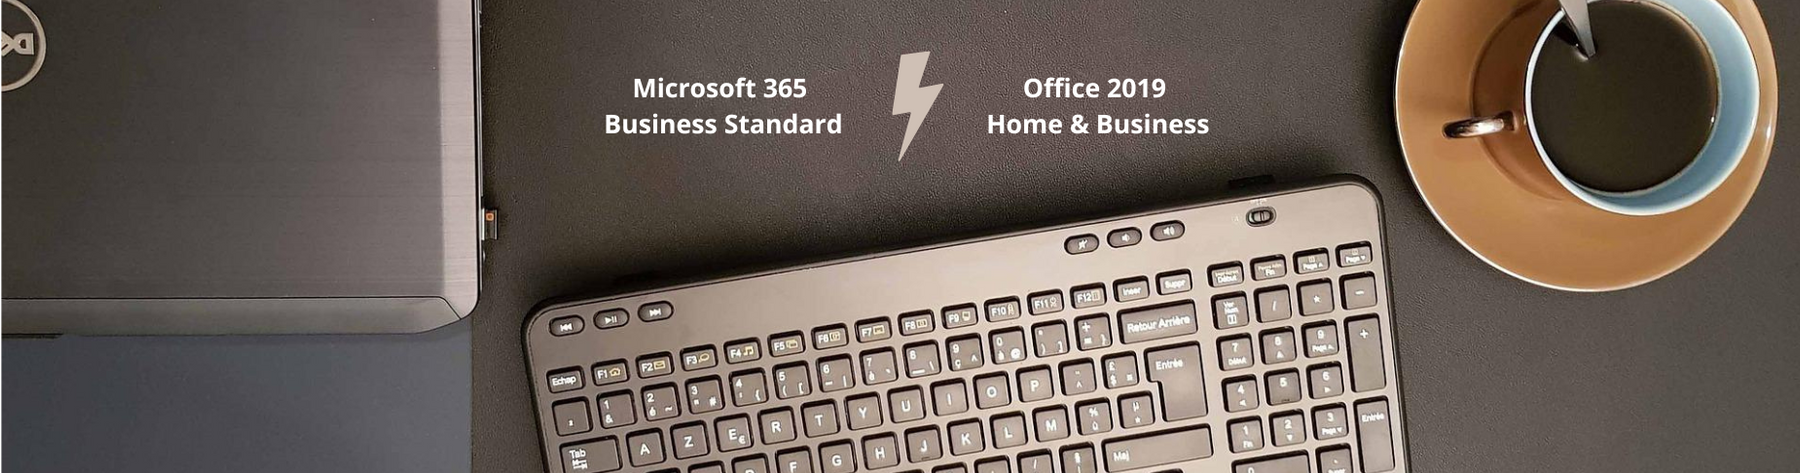 Microsoft 365 Business Standard i Office 2019 Home & Business Usporedba